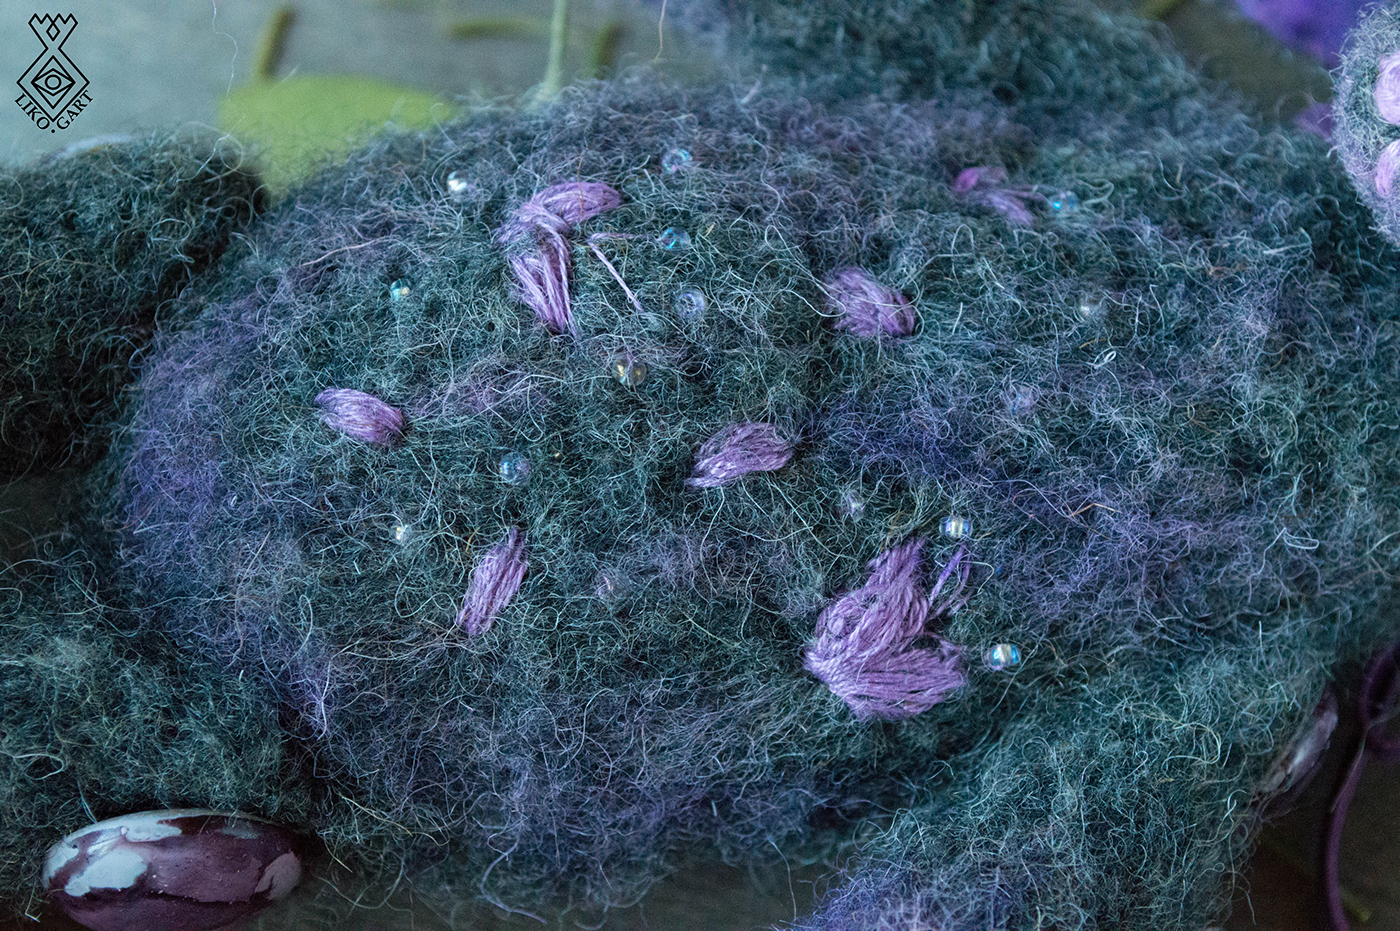 doll toy crochet amigurumi handmade violet lilac Embroidery art craft